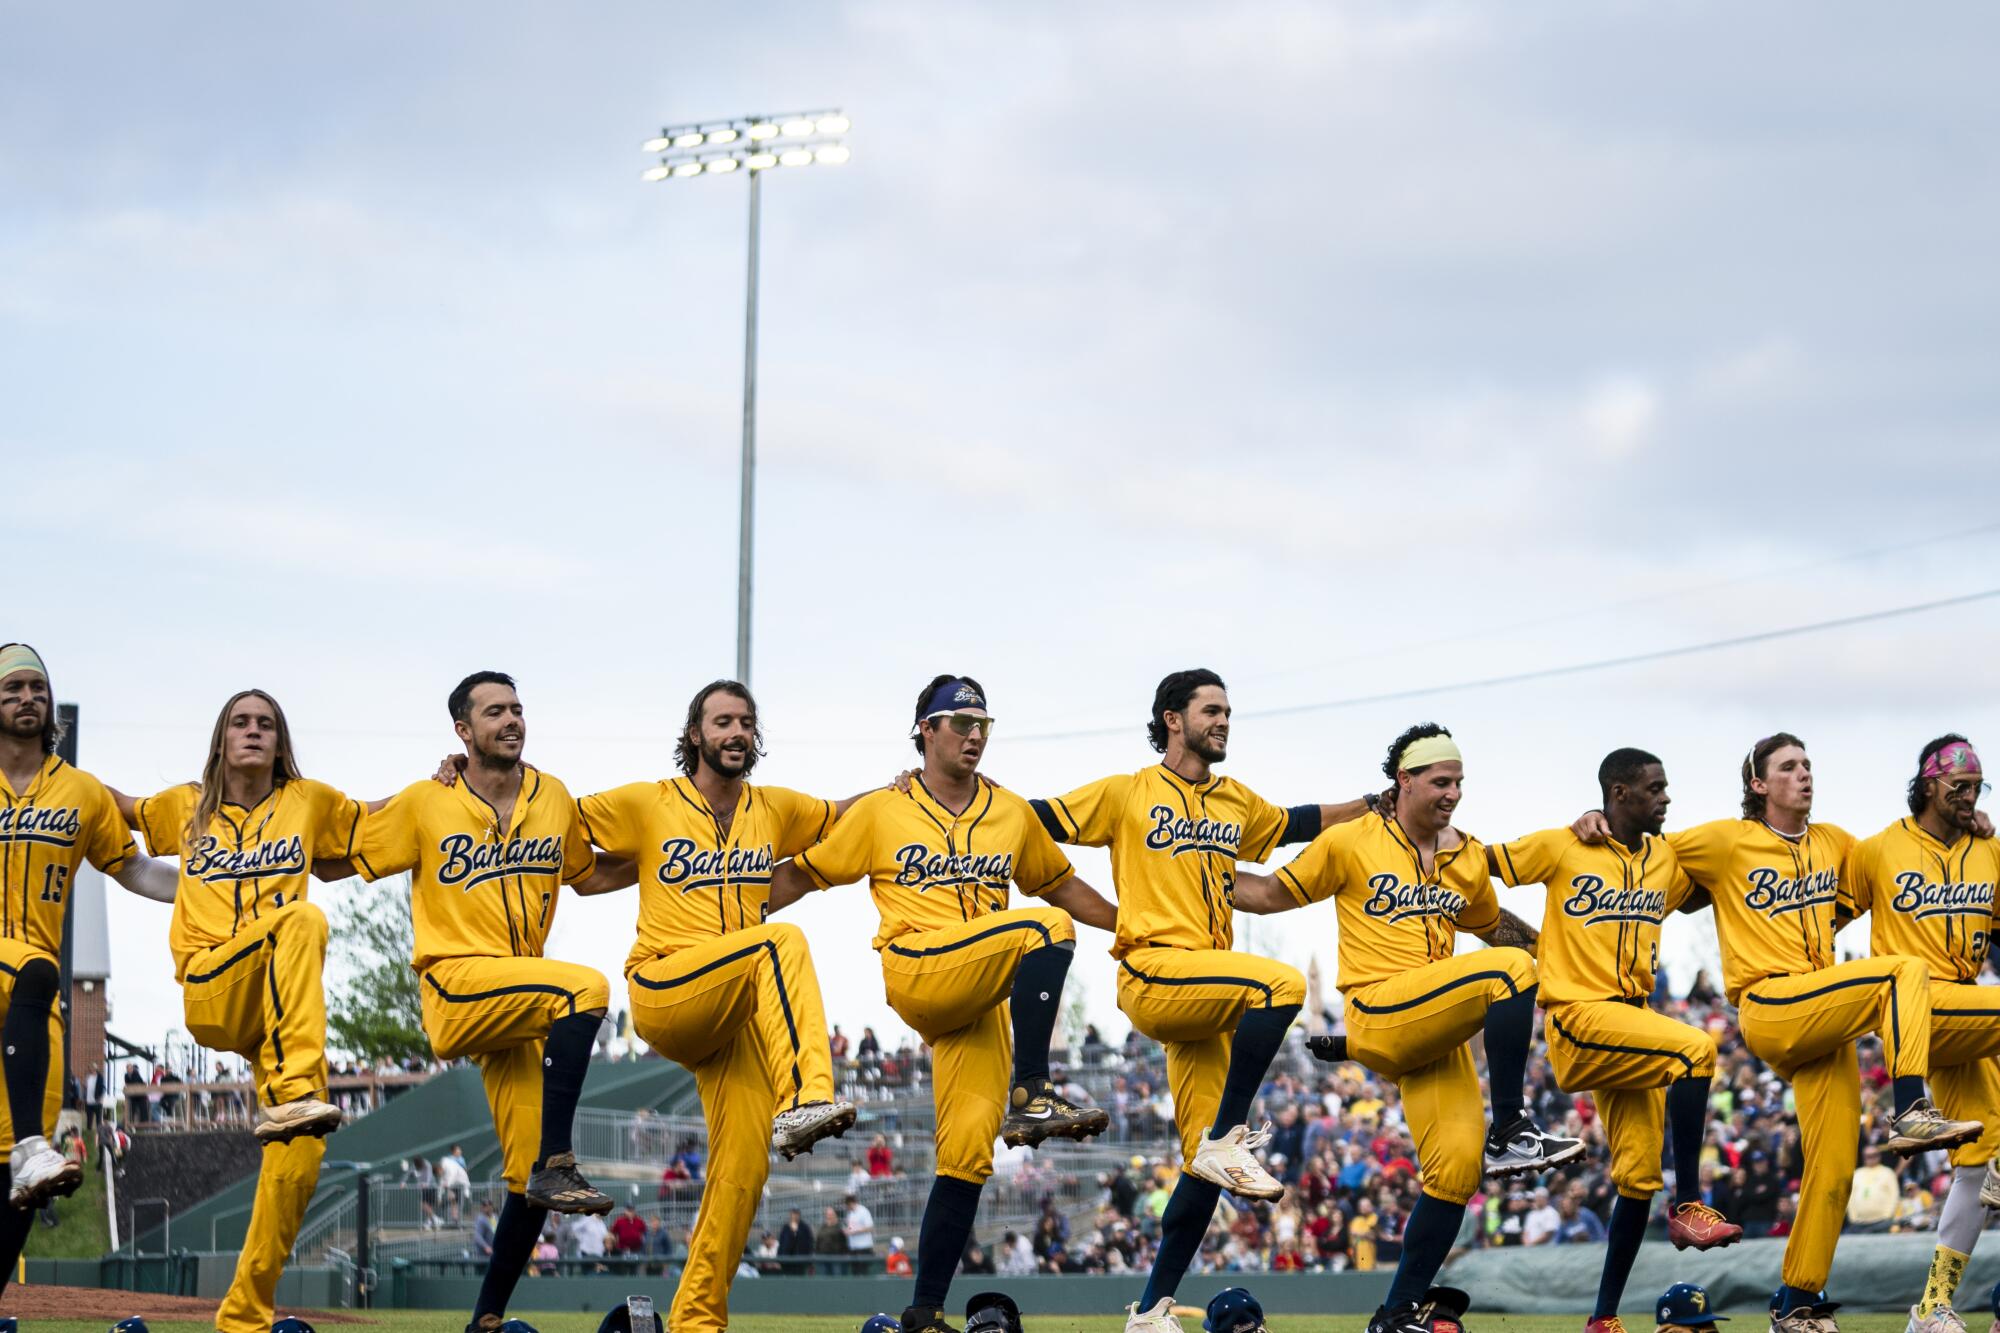 Savannah Bananas, the dancing Globetrotters of baseball, explained